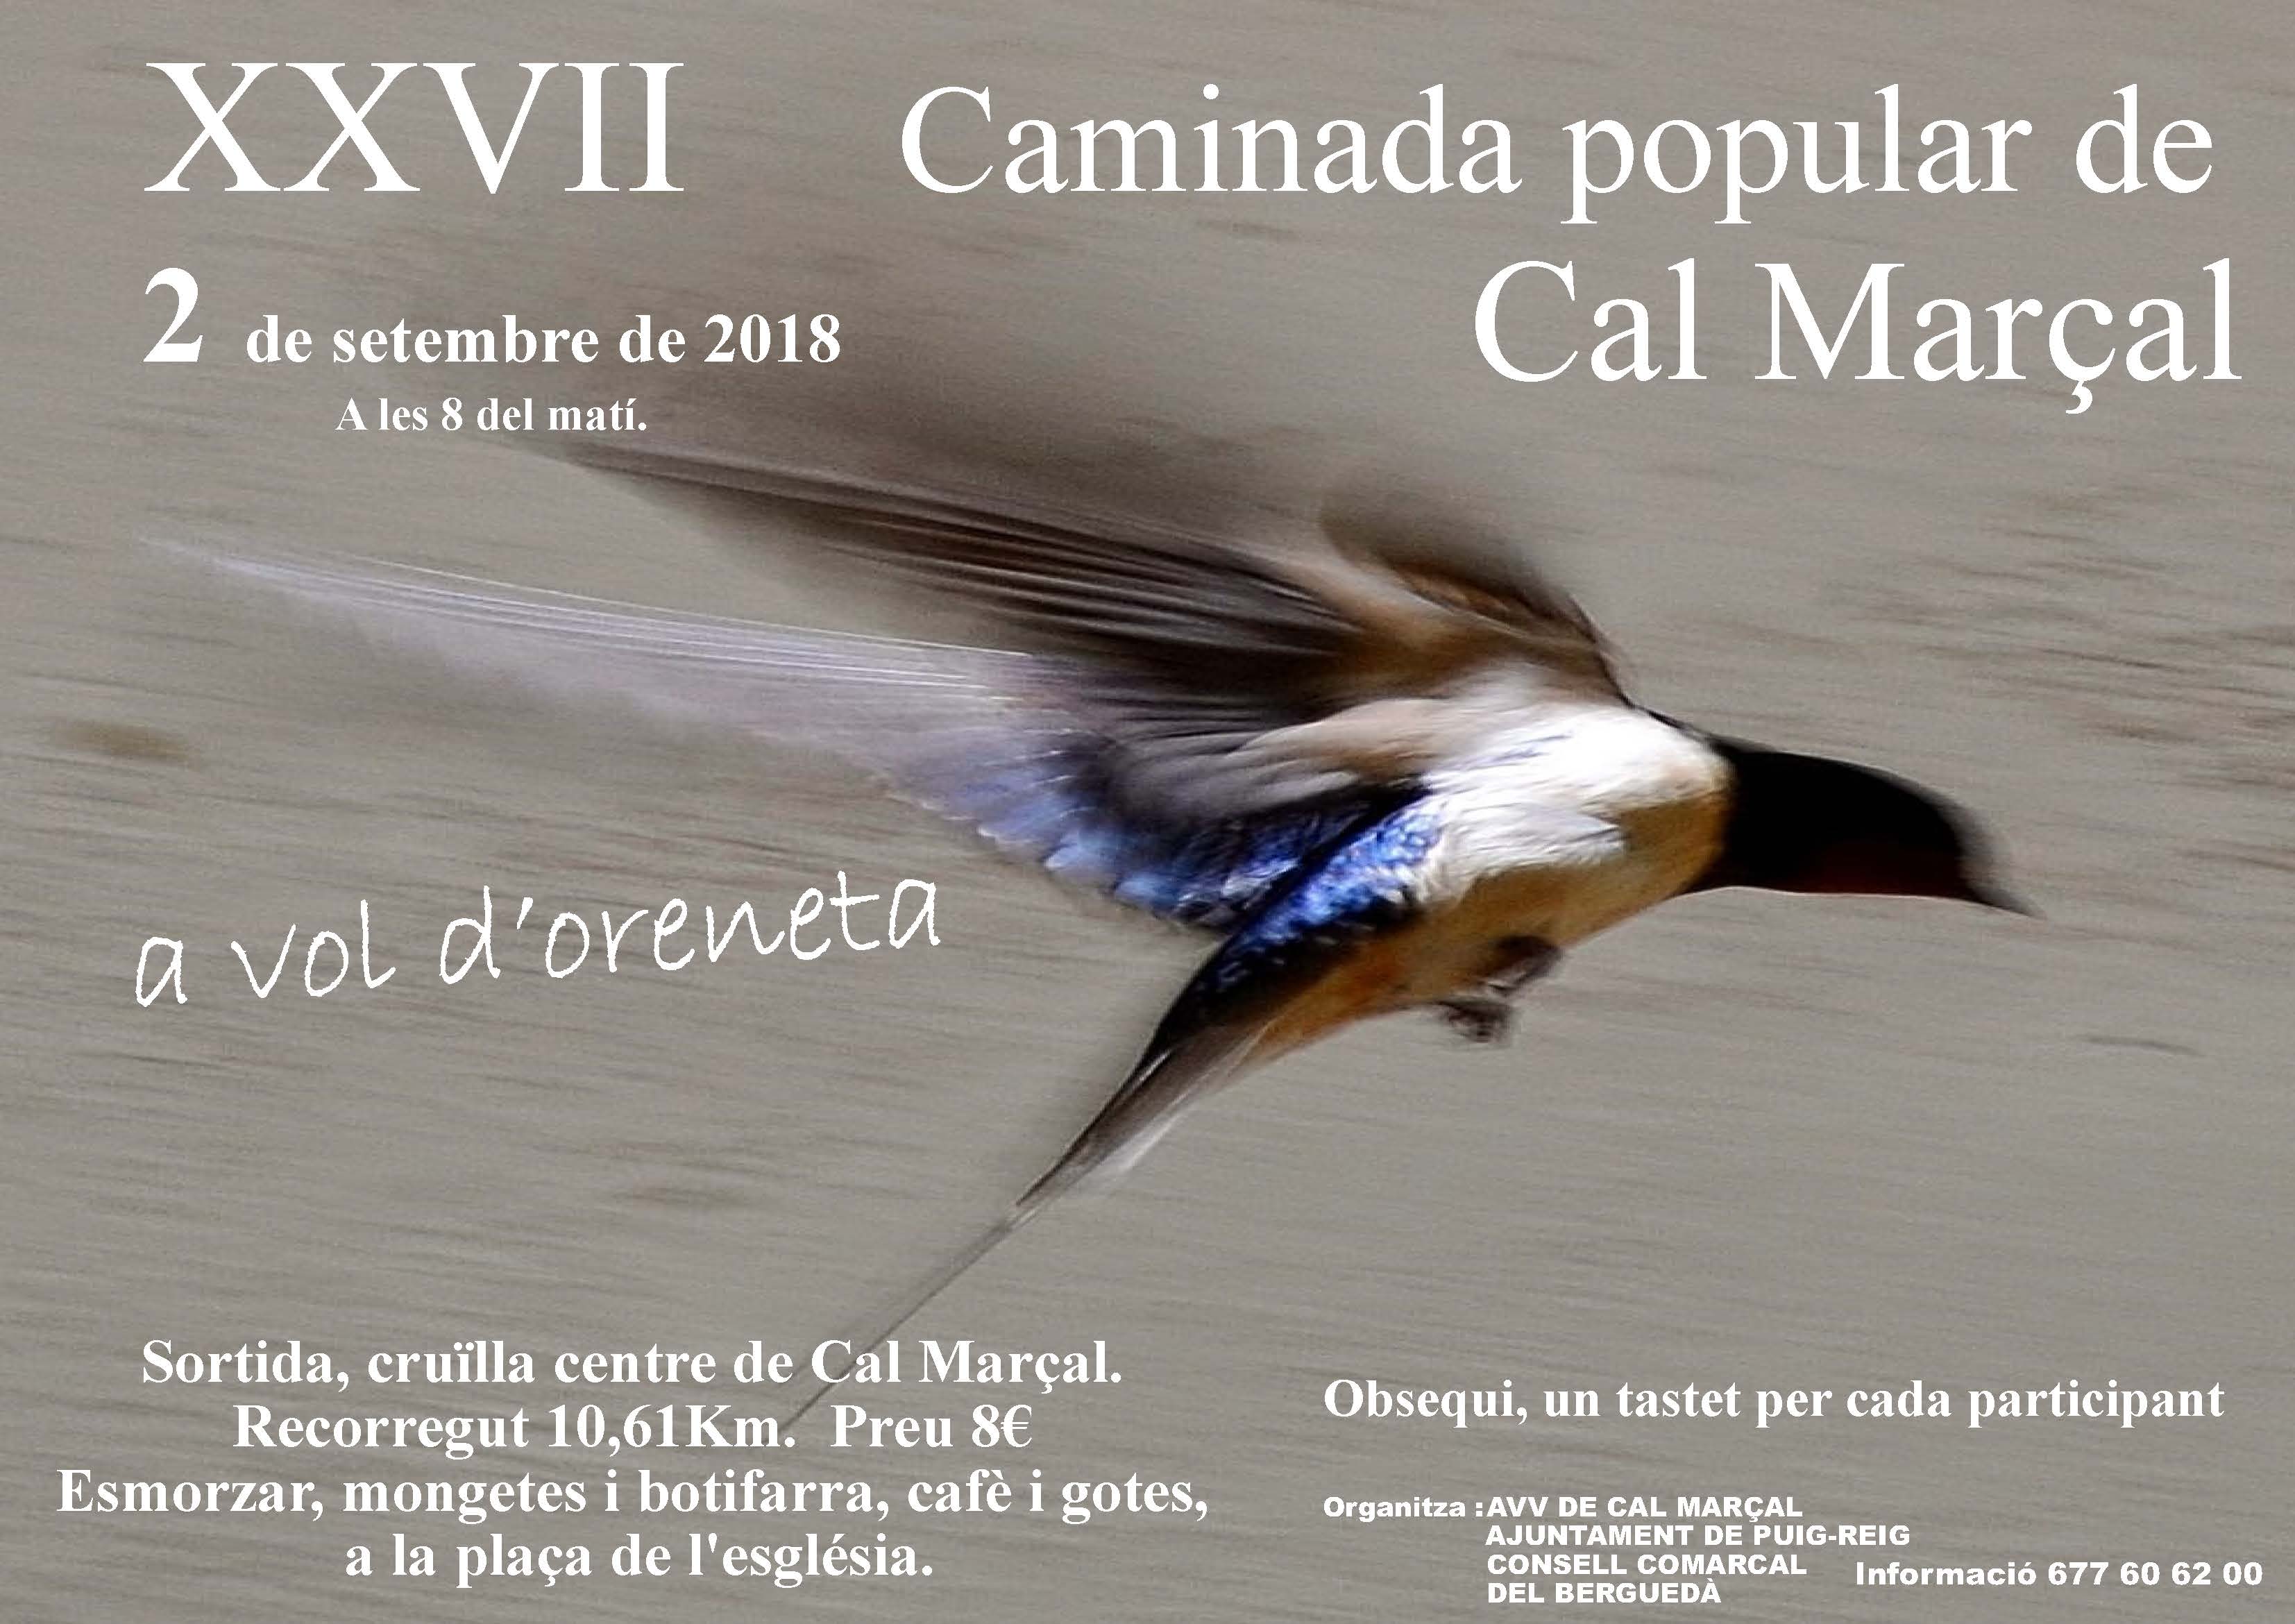 XXVII Caminada popular de Cal Marçal 2018 com vol d’oreneta Cartell_1 (2)